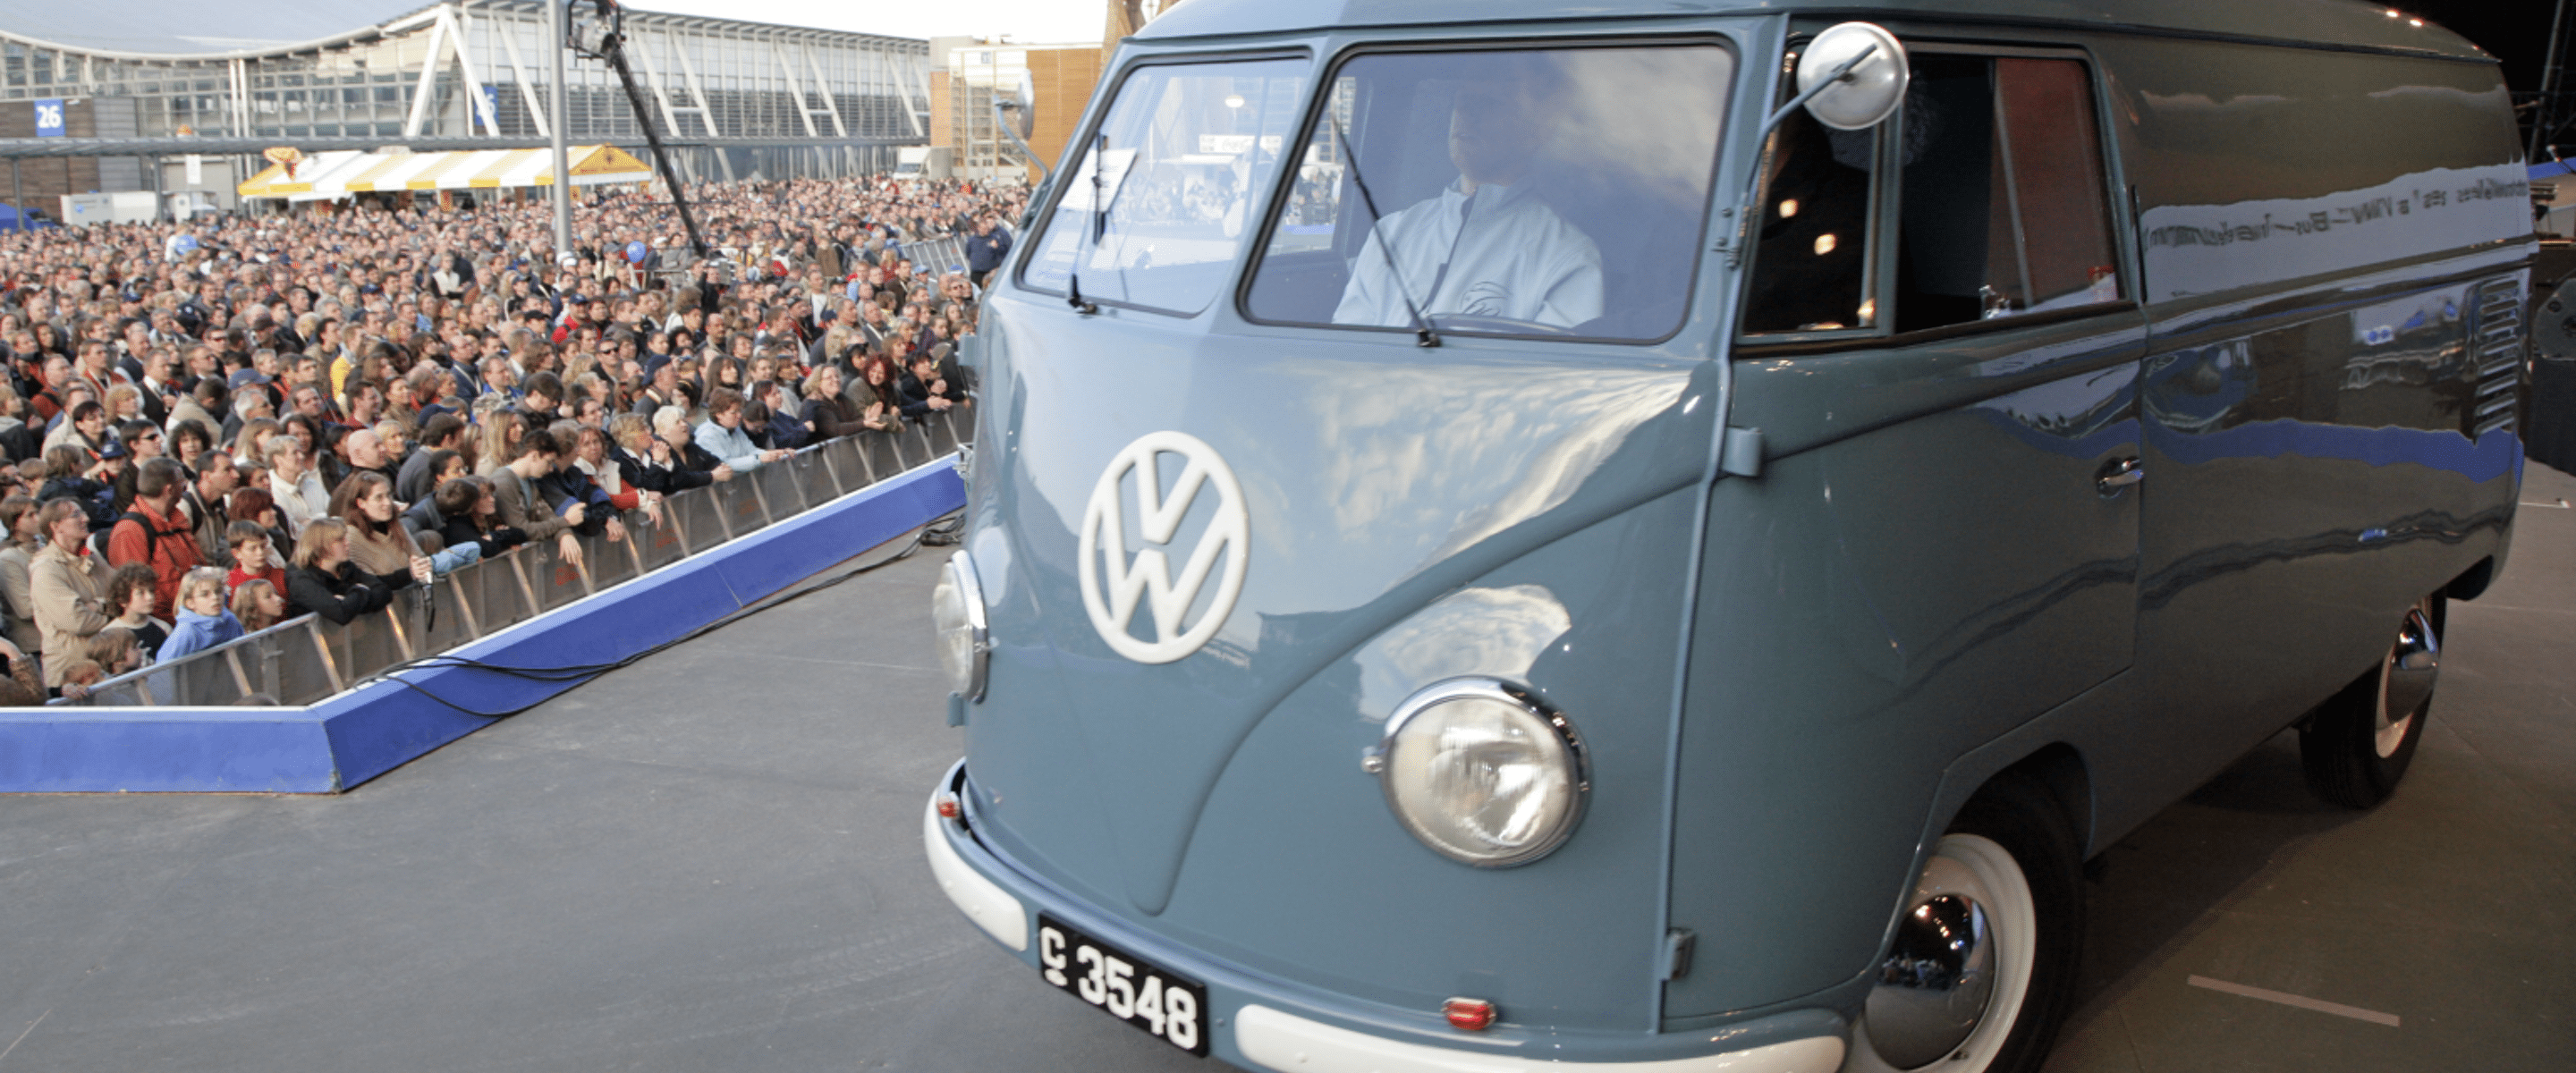 VW Bus Festival gaat 23 juni van start